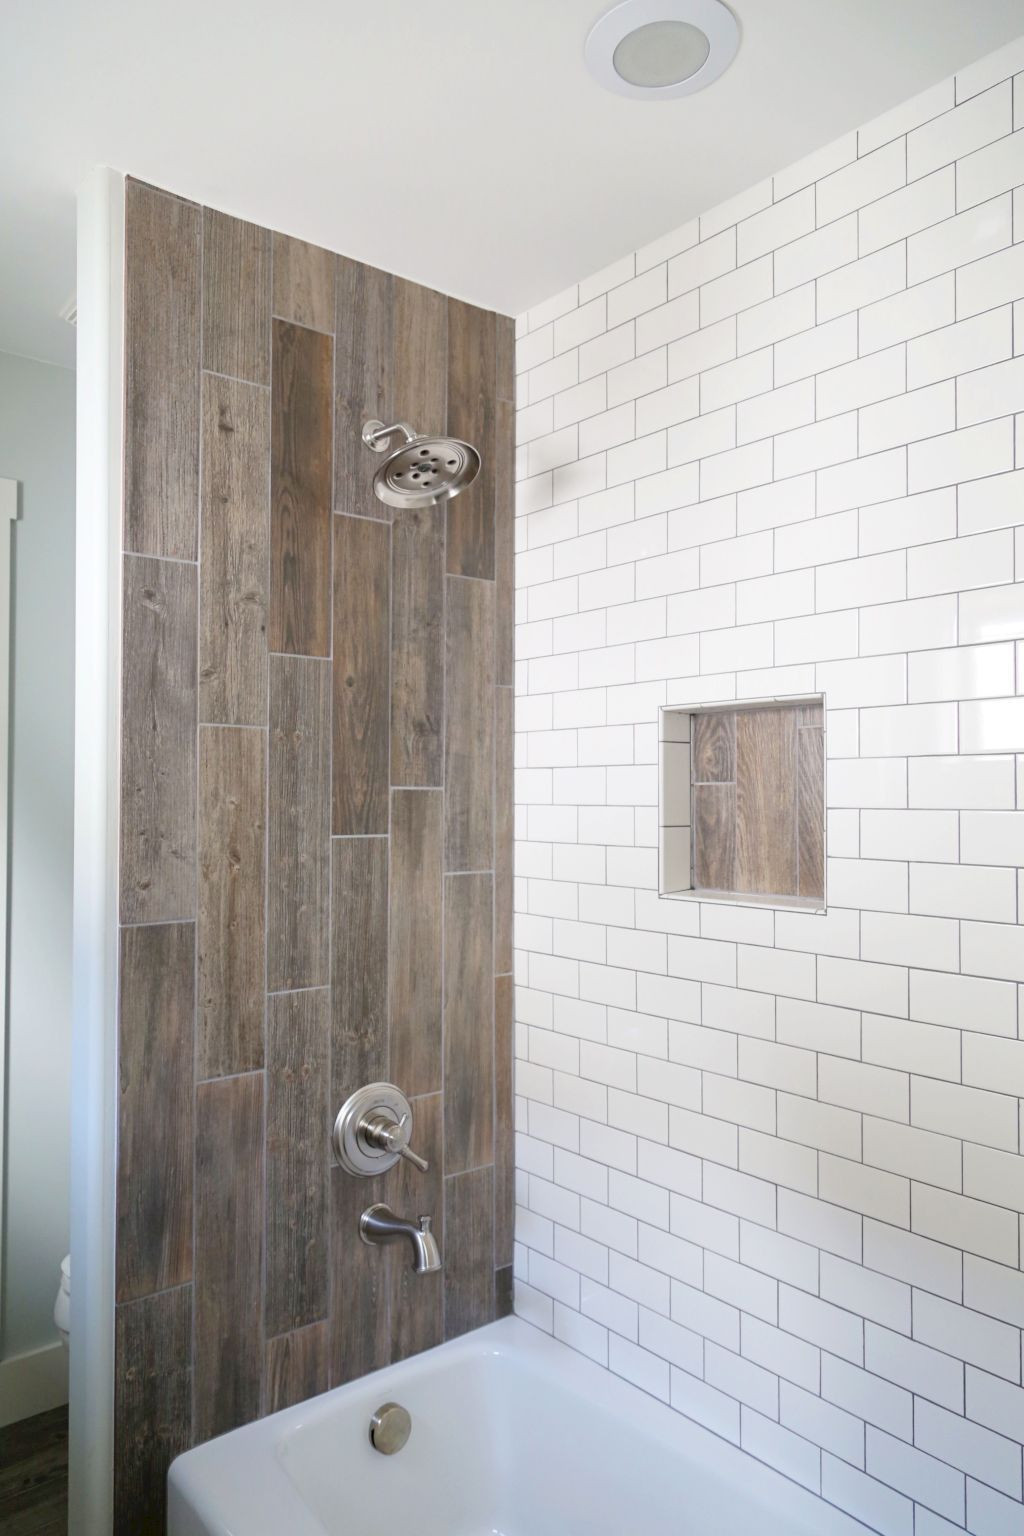 Tile Bathroom Showers
 15 Wood Tile Showers For Your Bathroom